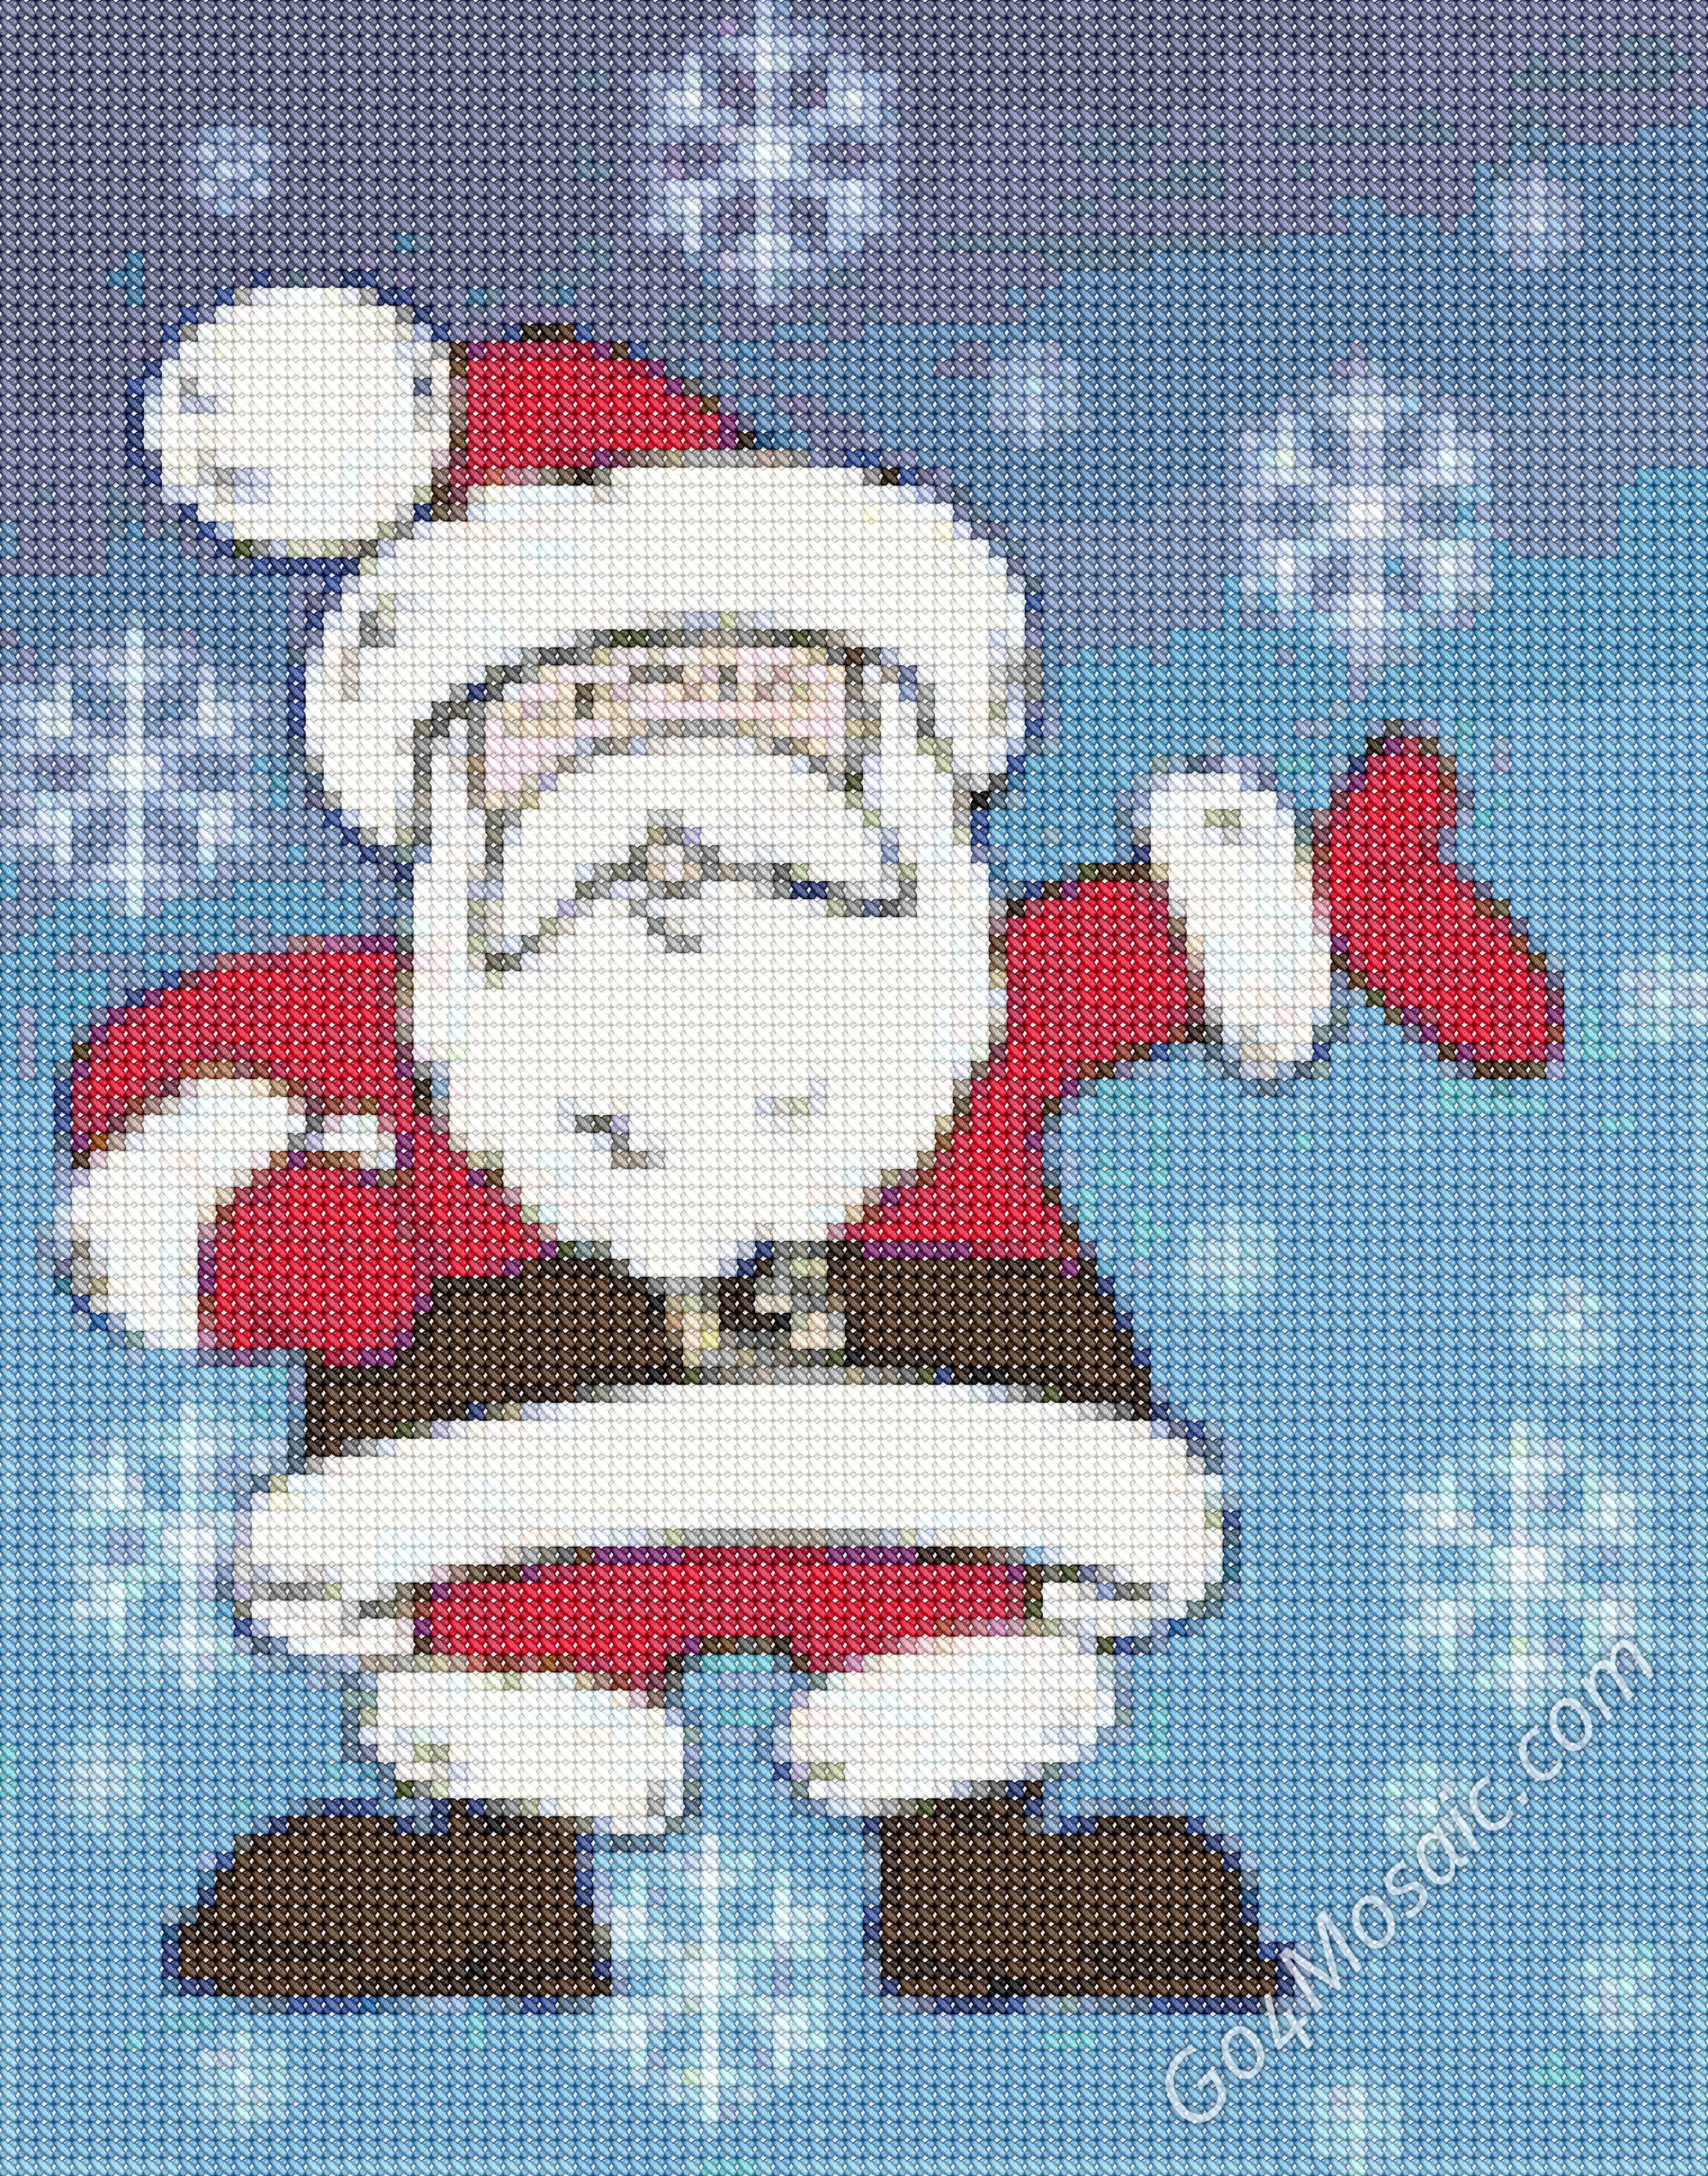 Cross-stitched Santa mosaic